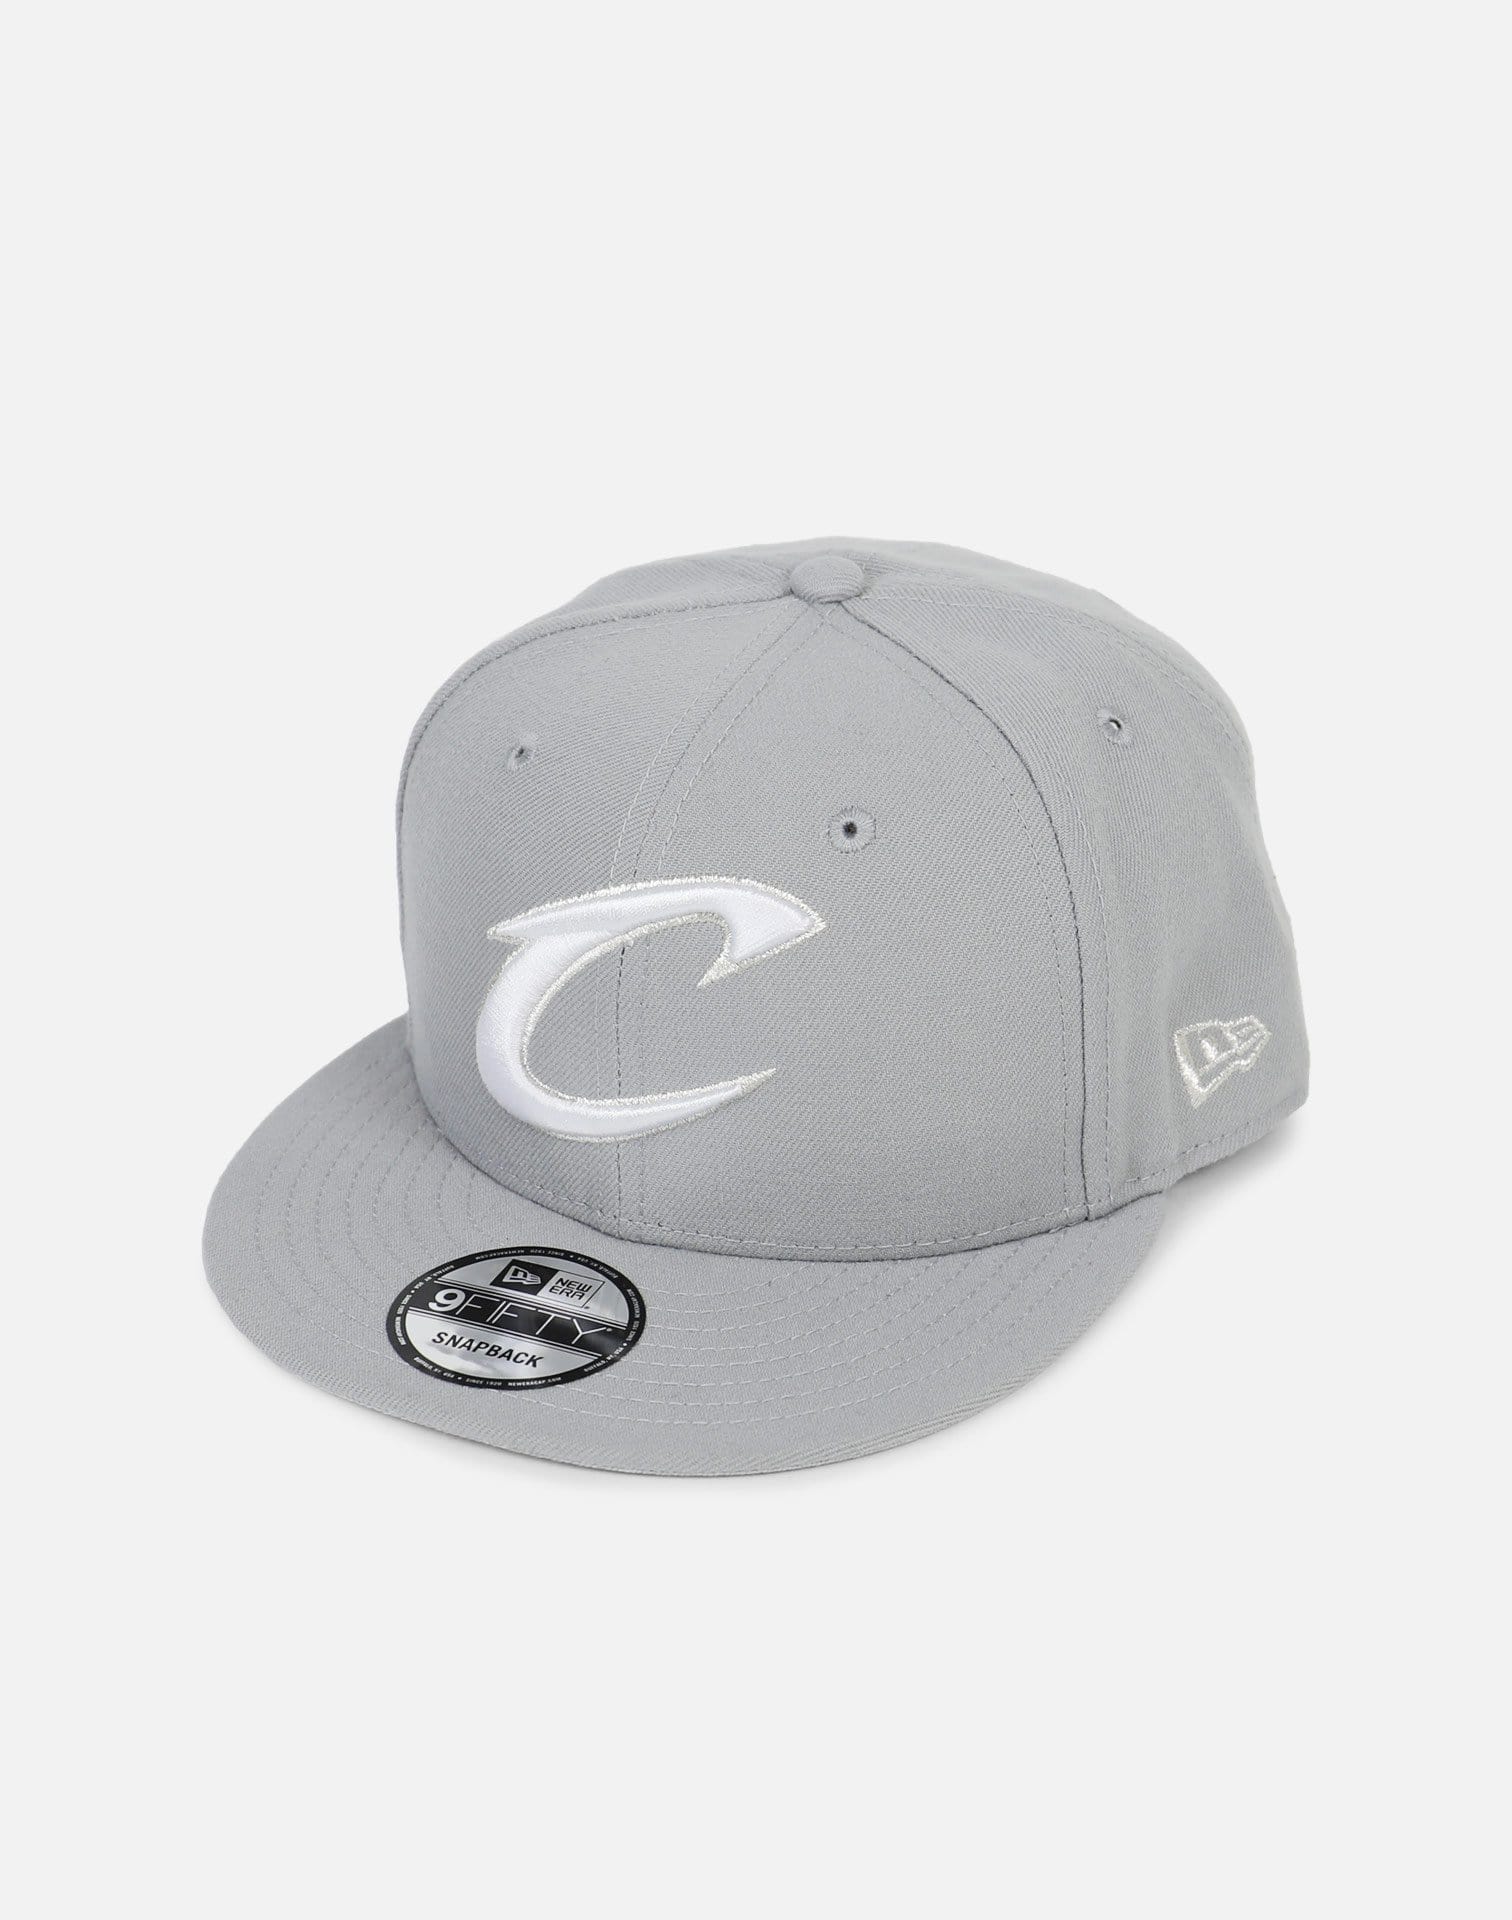 New Era Cleveland Cavaliers 'Pure Money' Snapback Hat